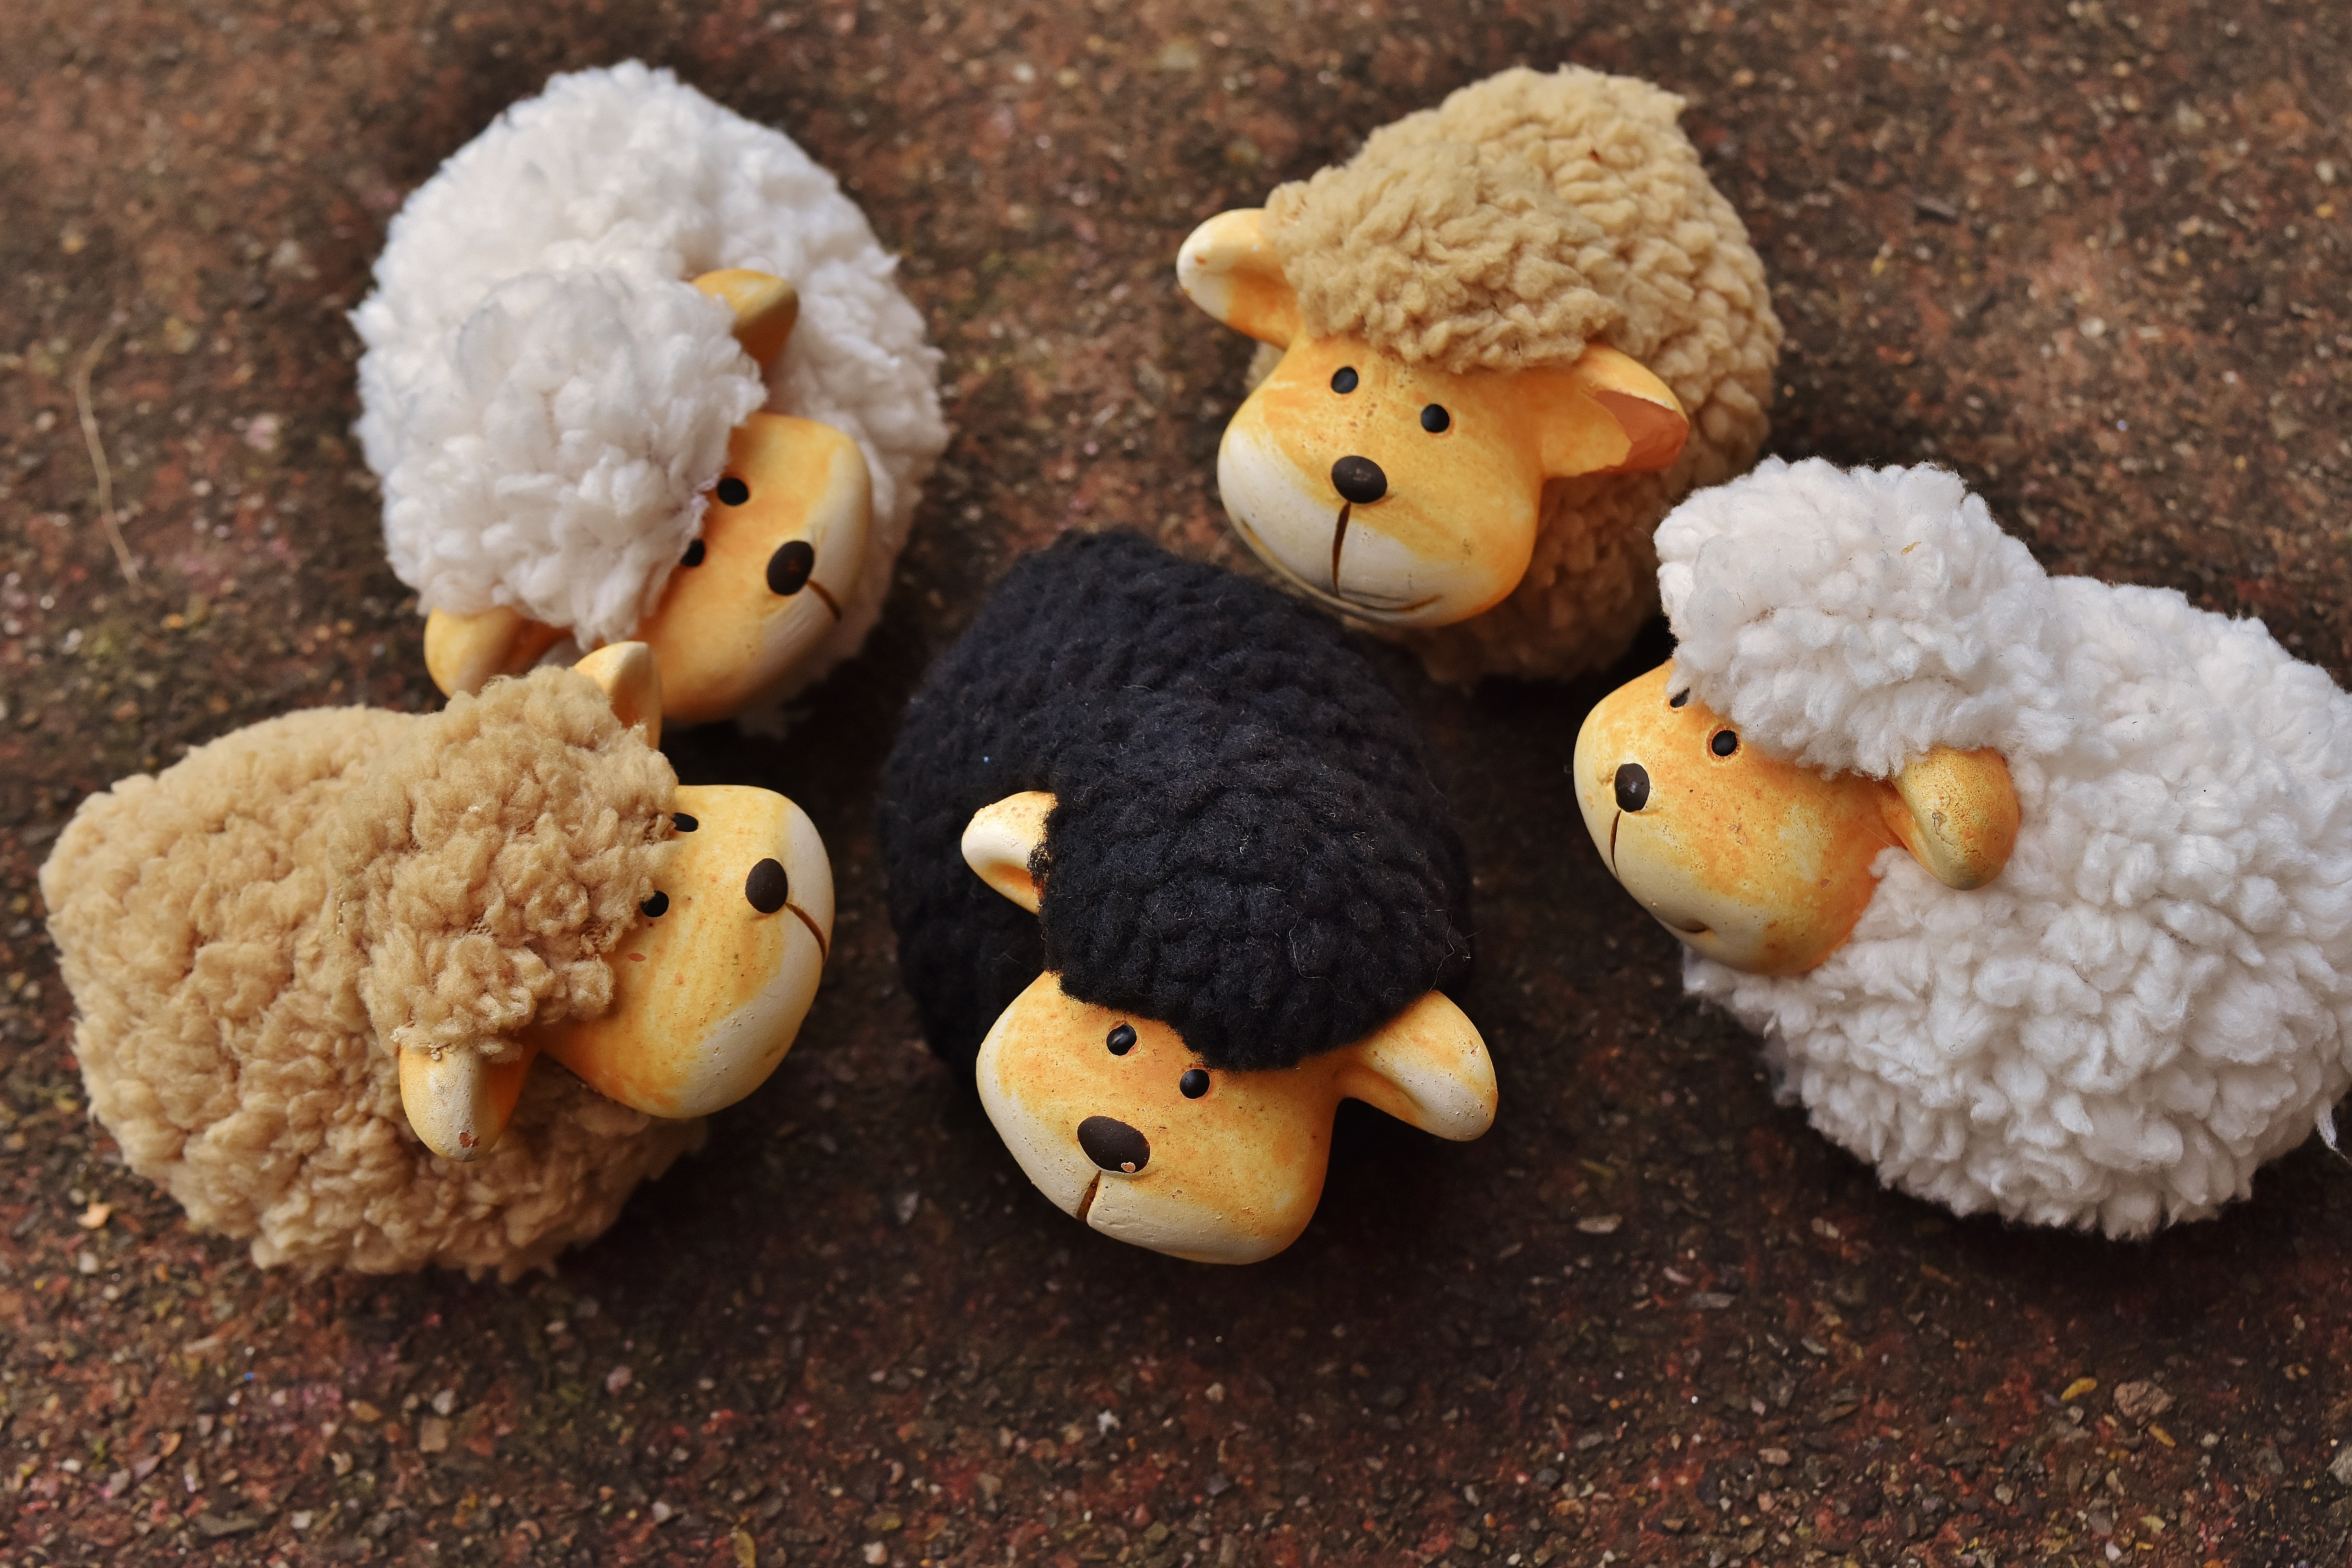 5 sheep figurines